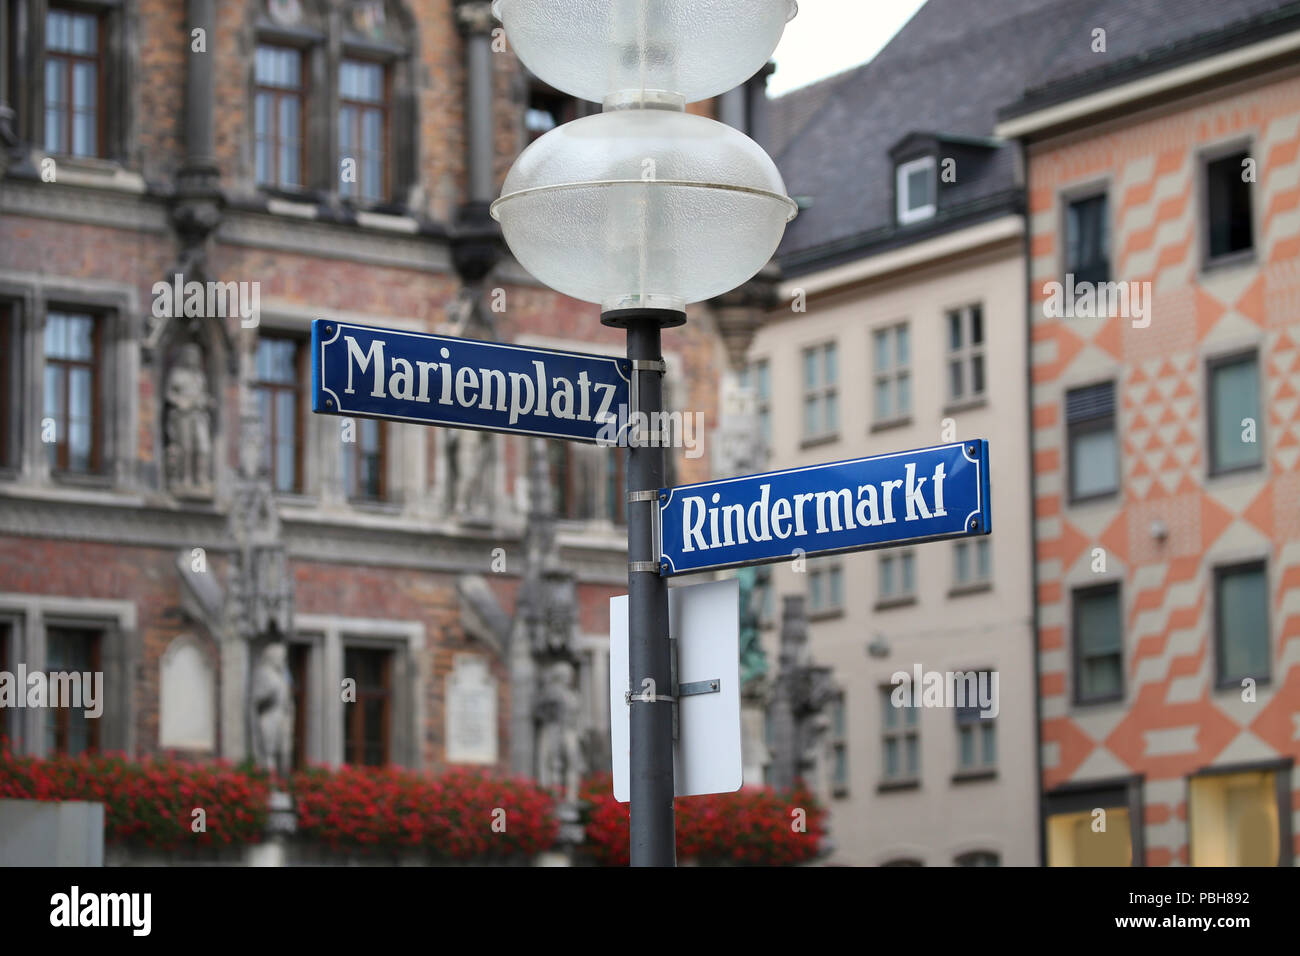 Marienplatz and Rindermarkt  street and square name on the Marienplatz in Munich, German Stock Photo